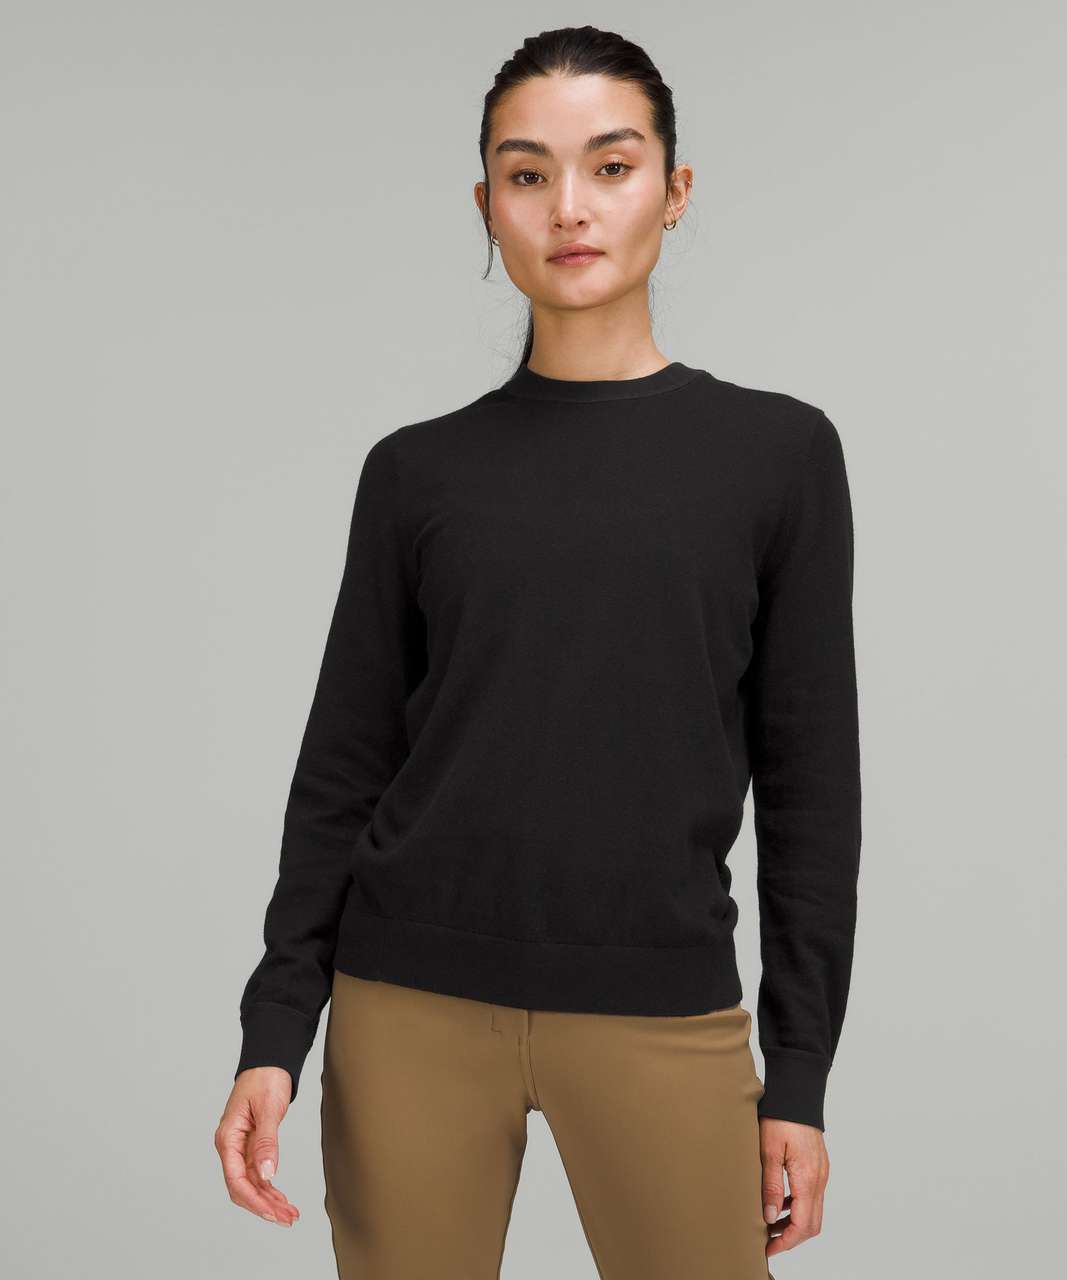 https://storage.googleapis.com/lulu-fanatics/product/74704/1280/lululemon-silk-blend-crewneck-sweater-black-0001-398630.jpg